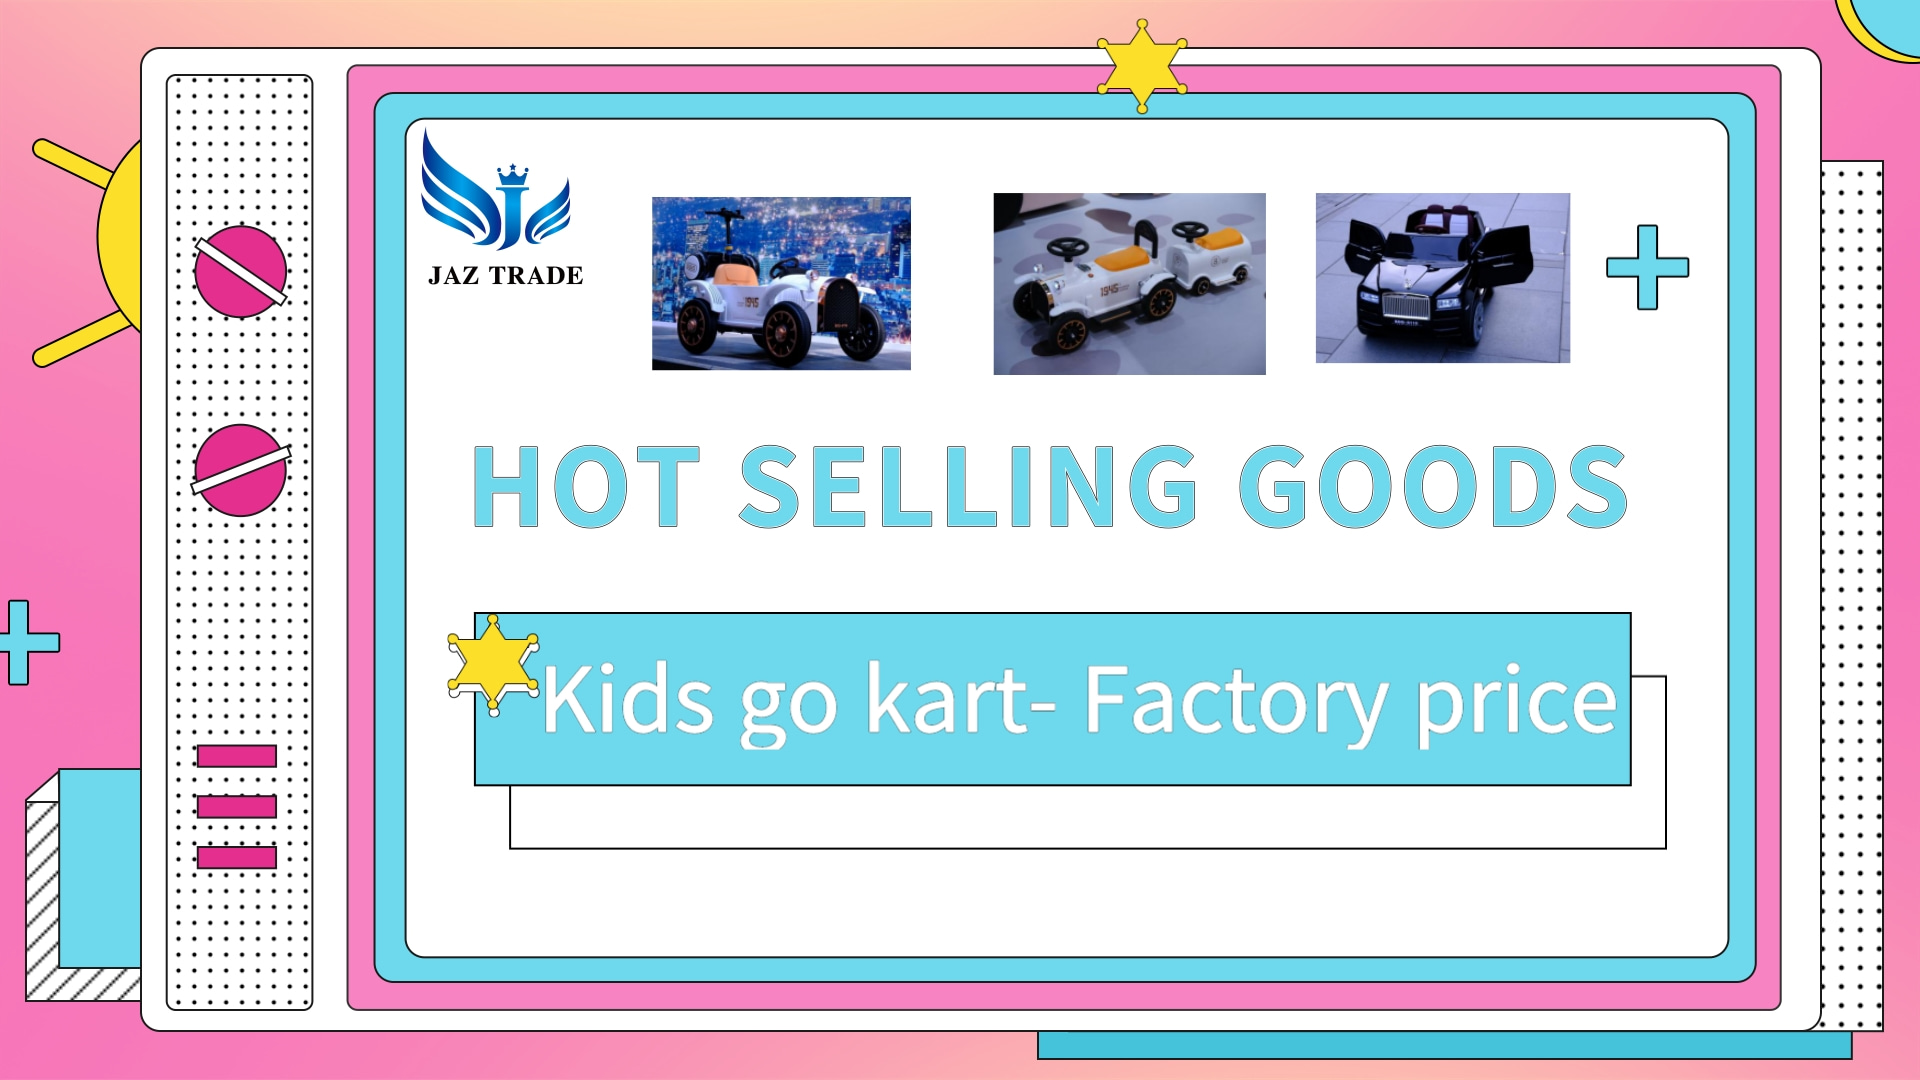 Kids go Kart China factory|JAZ hot sale selling goods recomended|China hot selling goods|BalanceBike